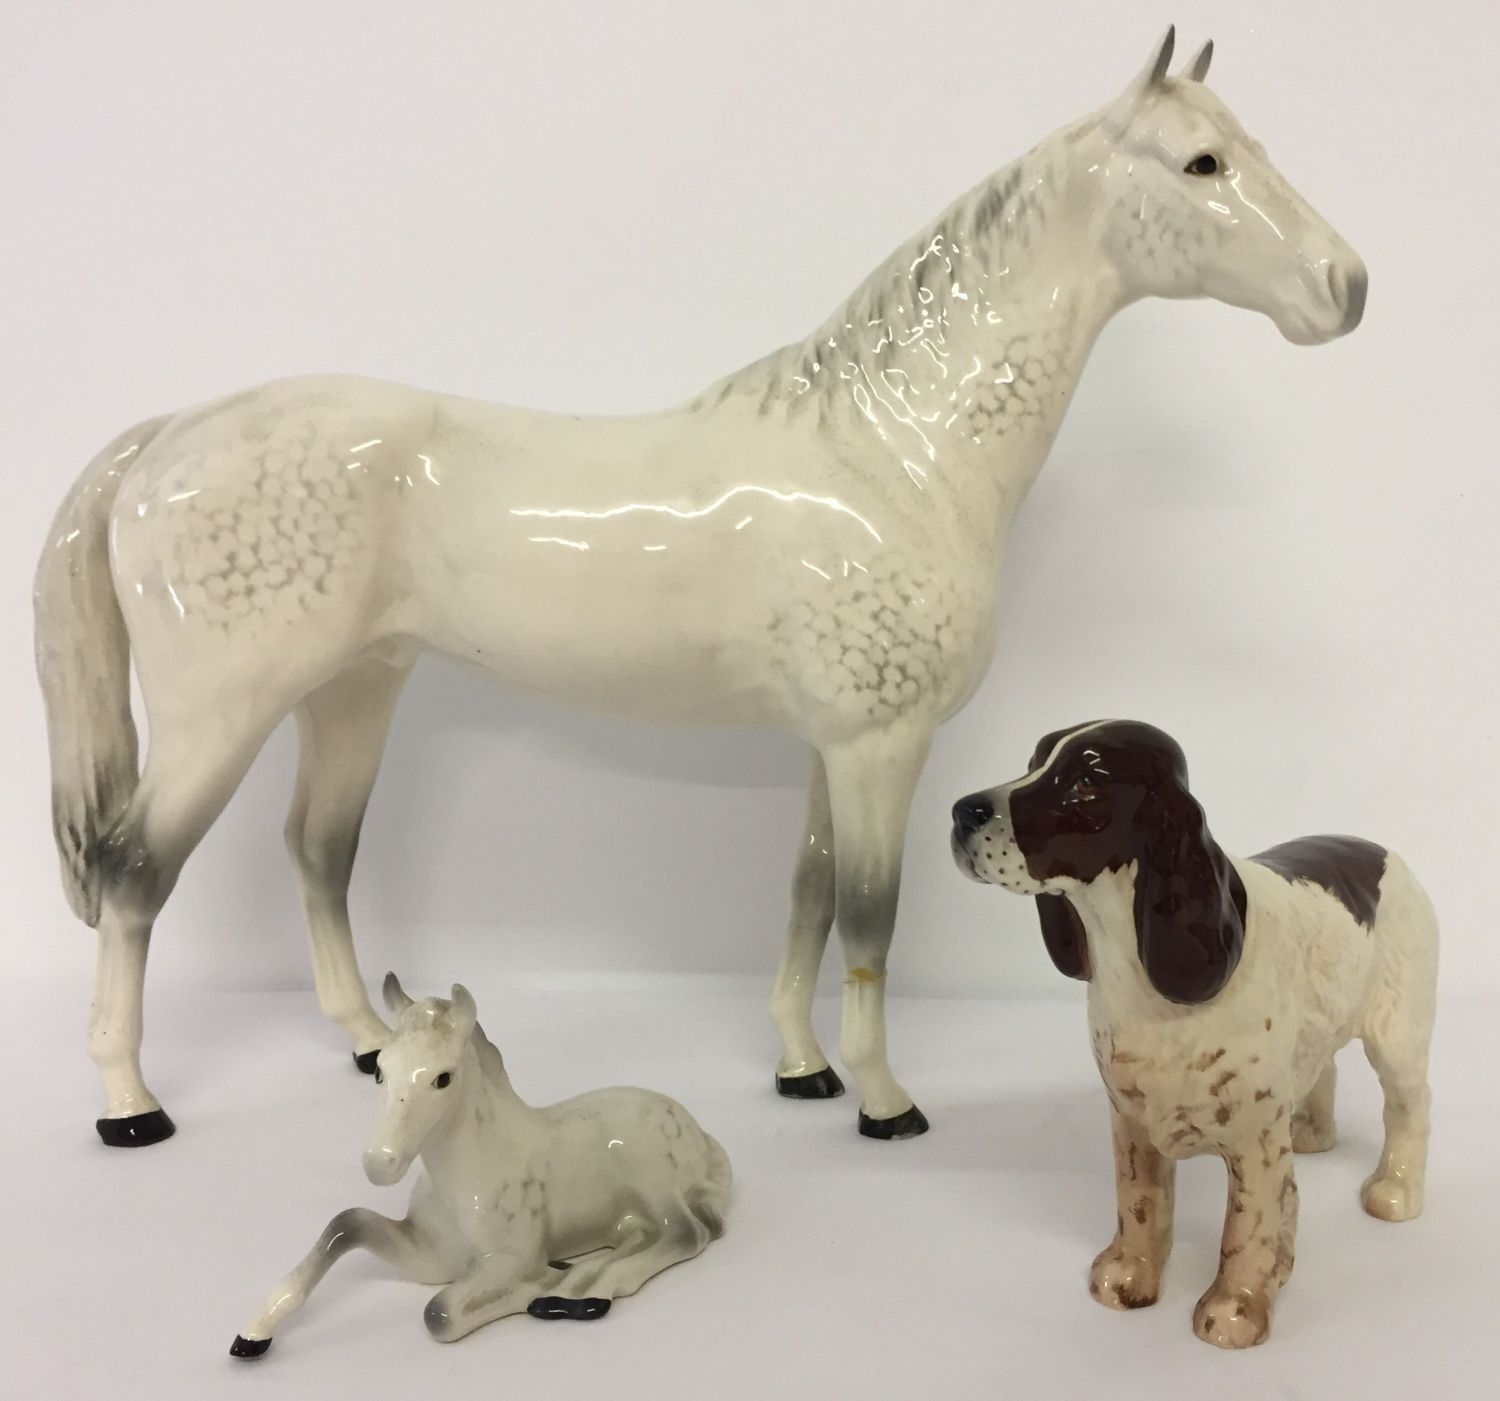 3 Beswick ceramic animal figurines, all a/f.